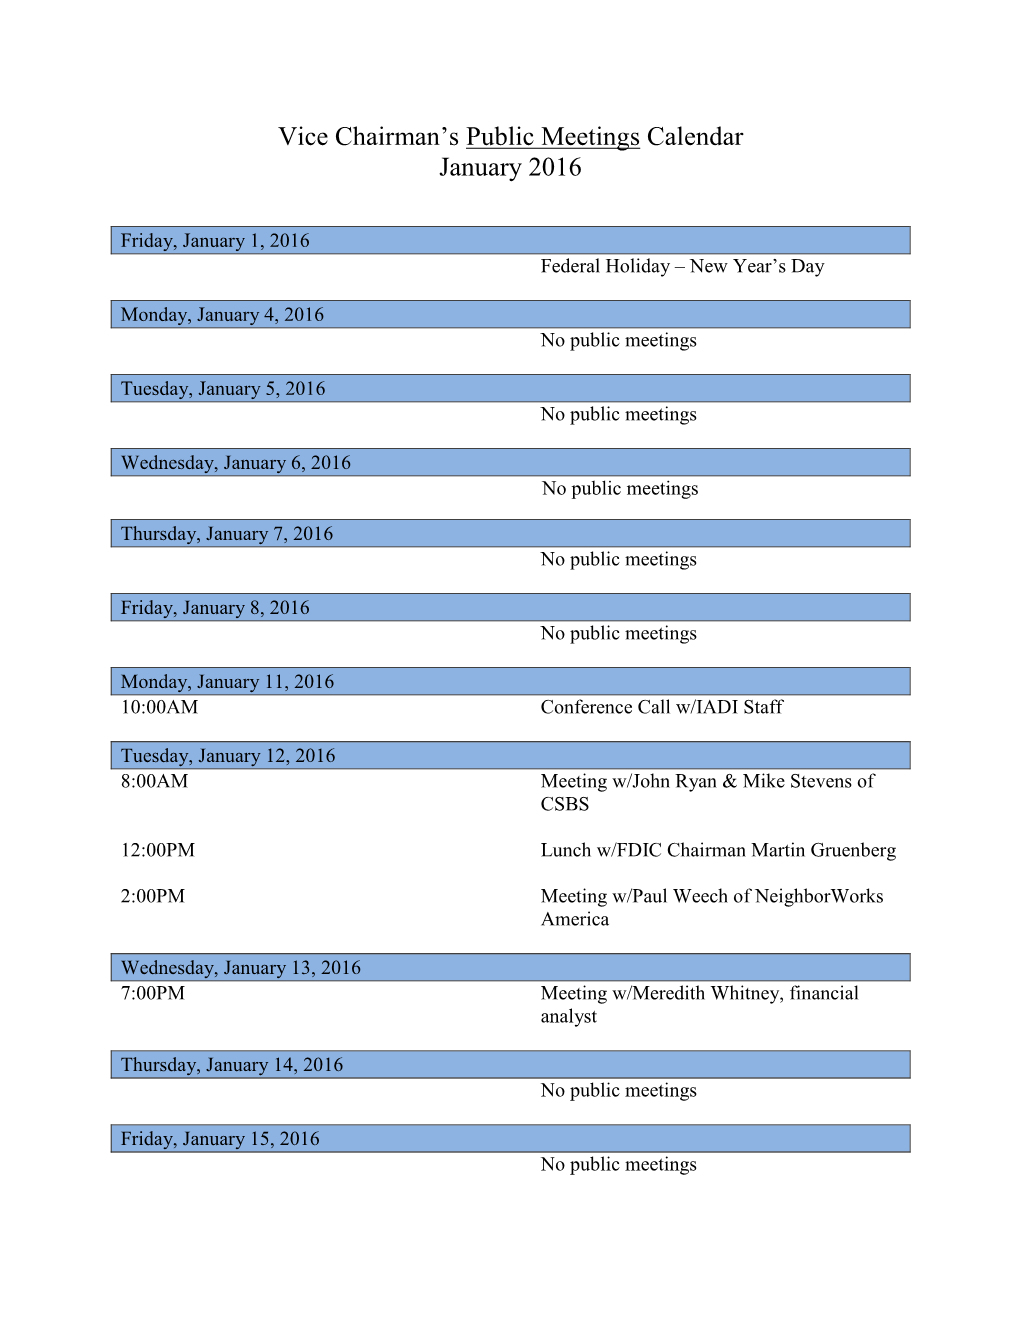 Vice Chairman's Public Meetings Calendar January 2016